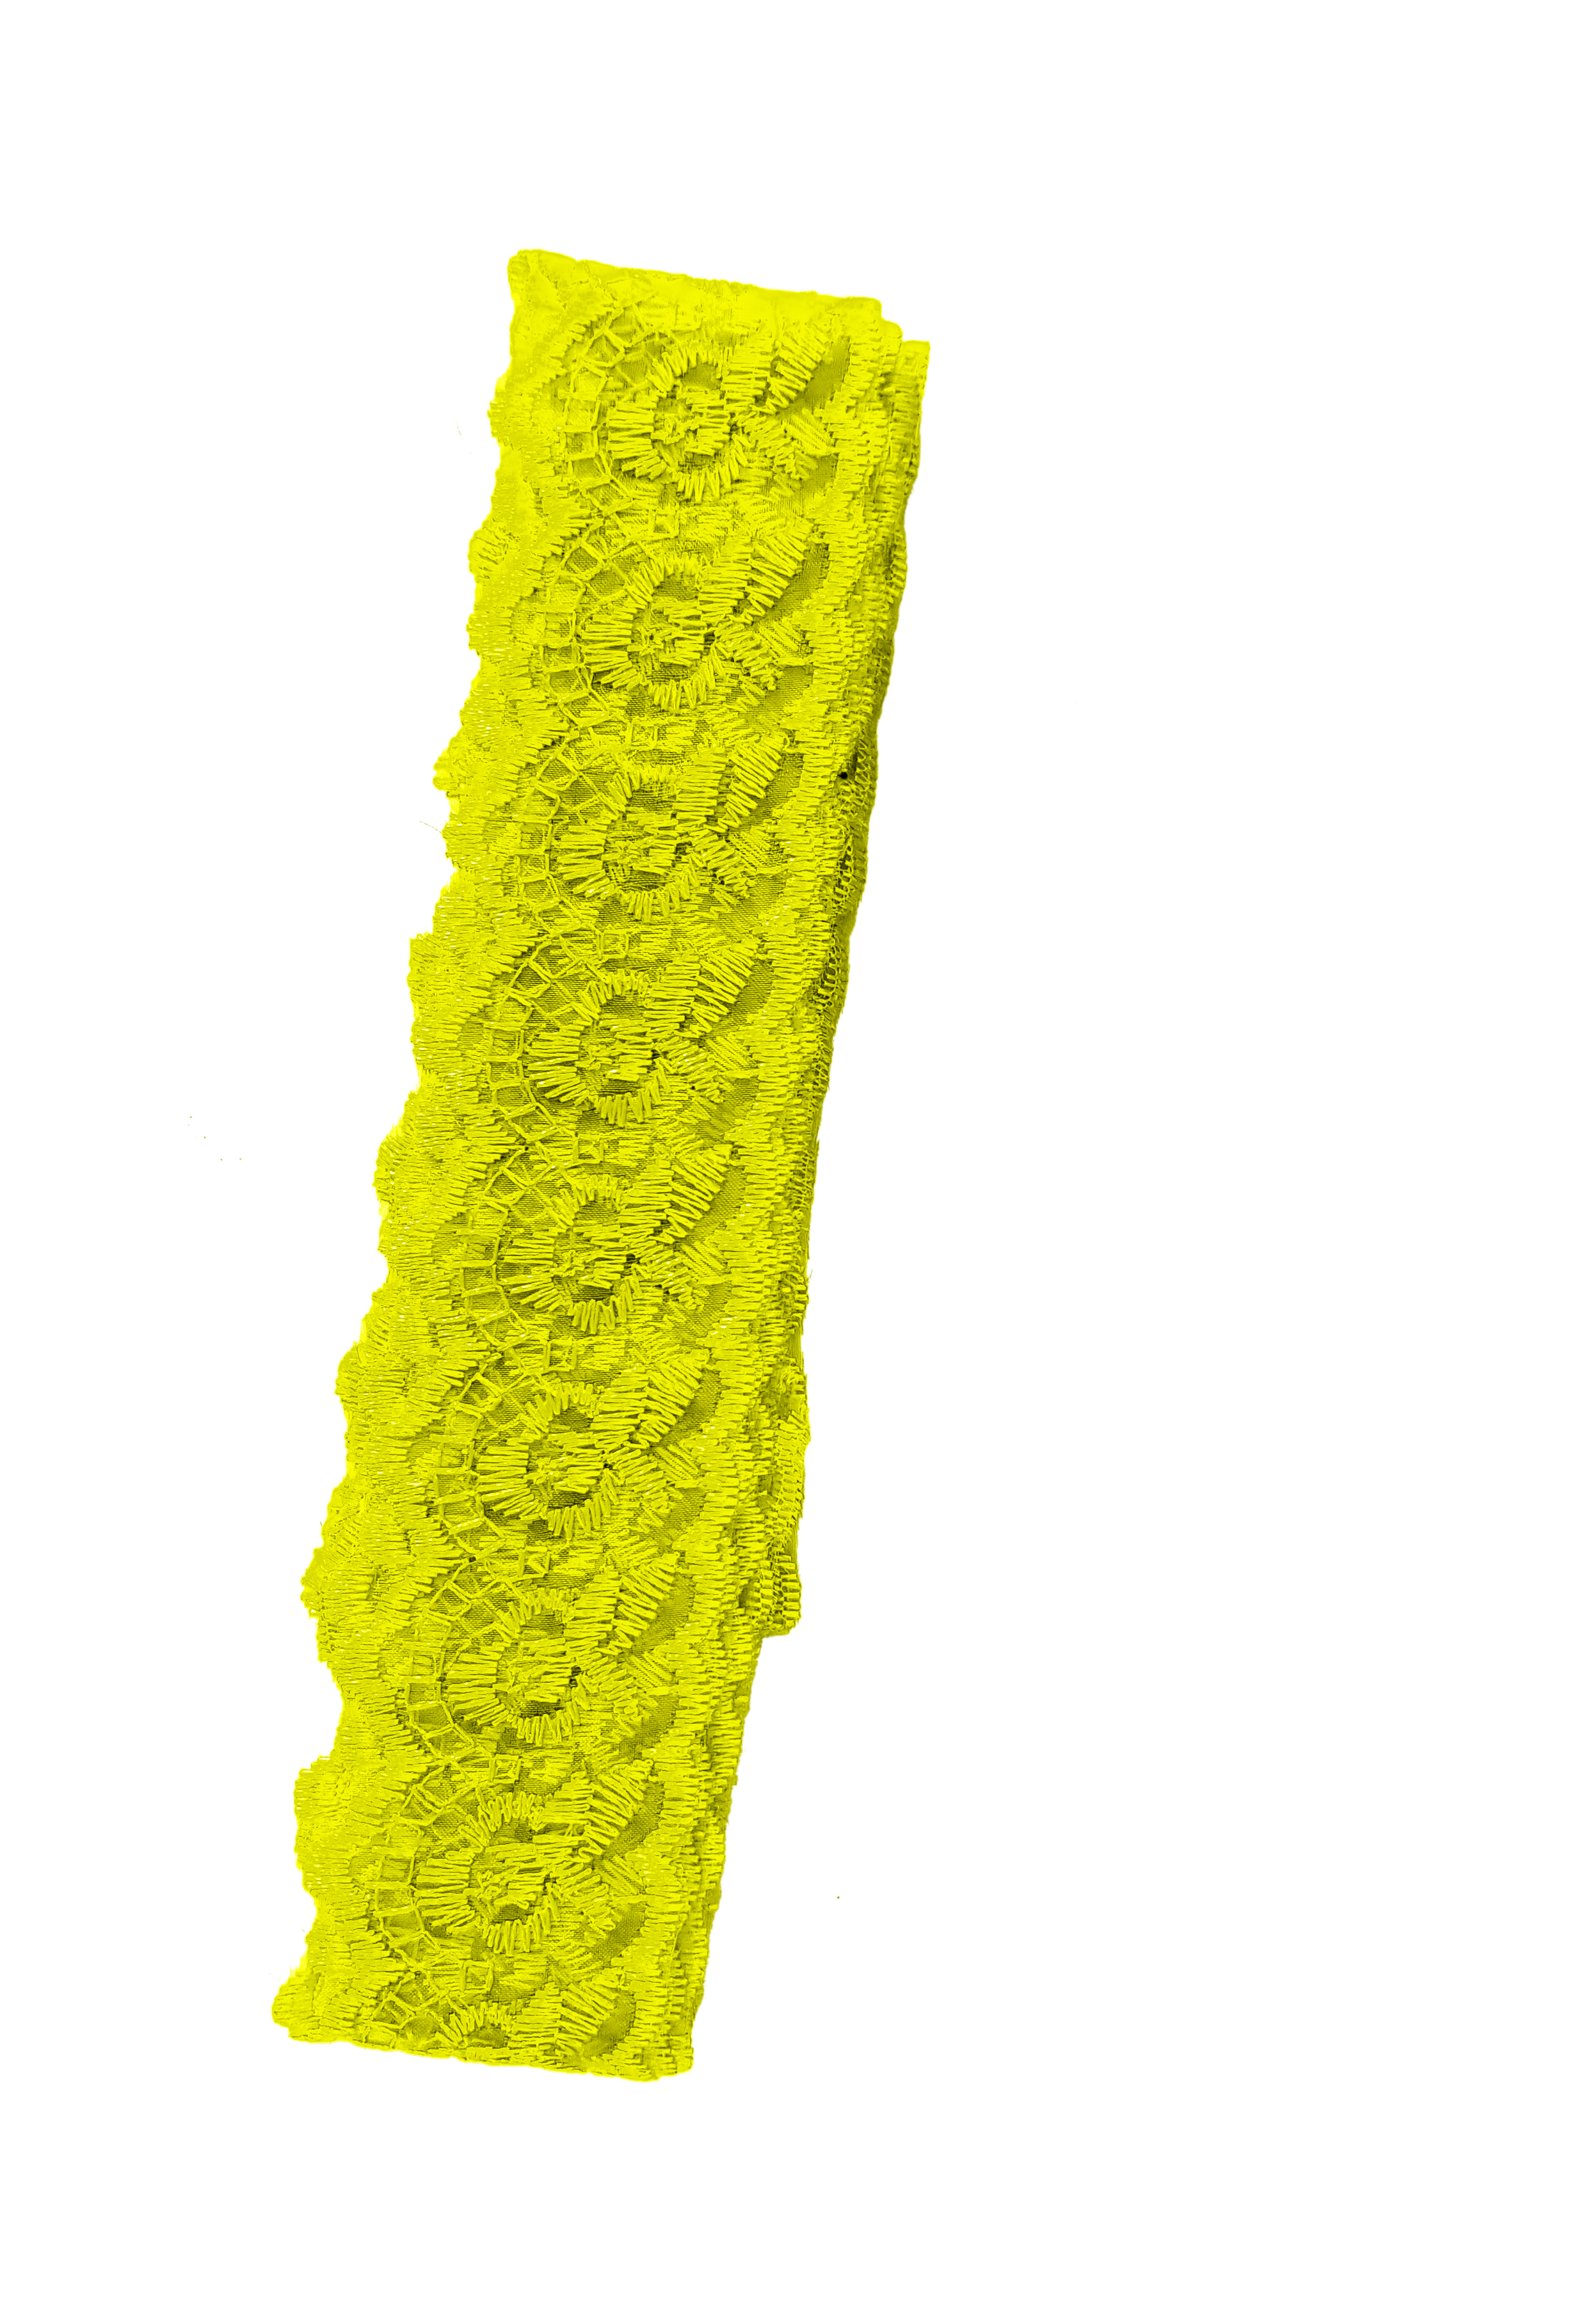 Lemon Yellow Lace 1m